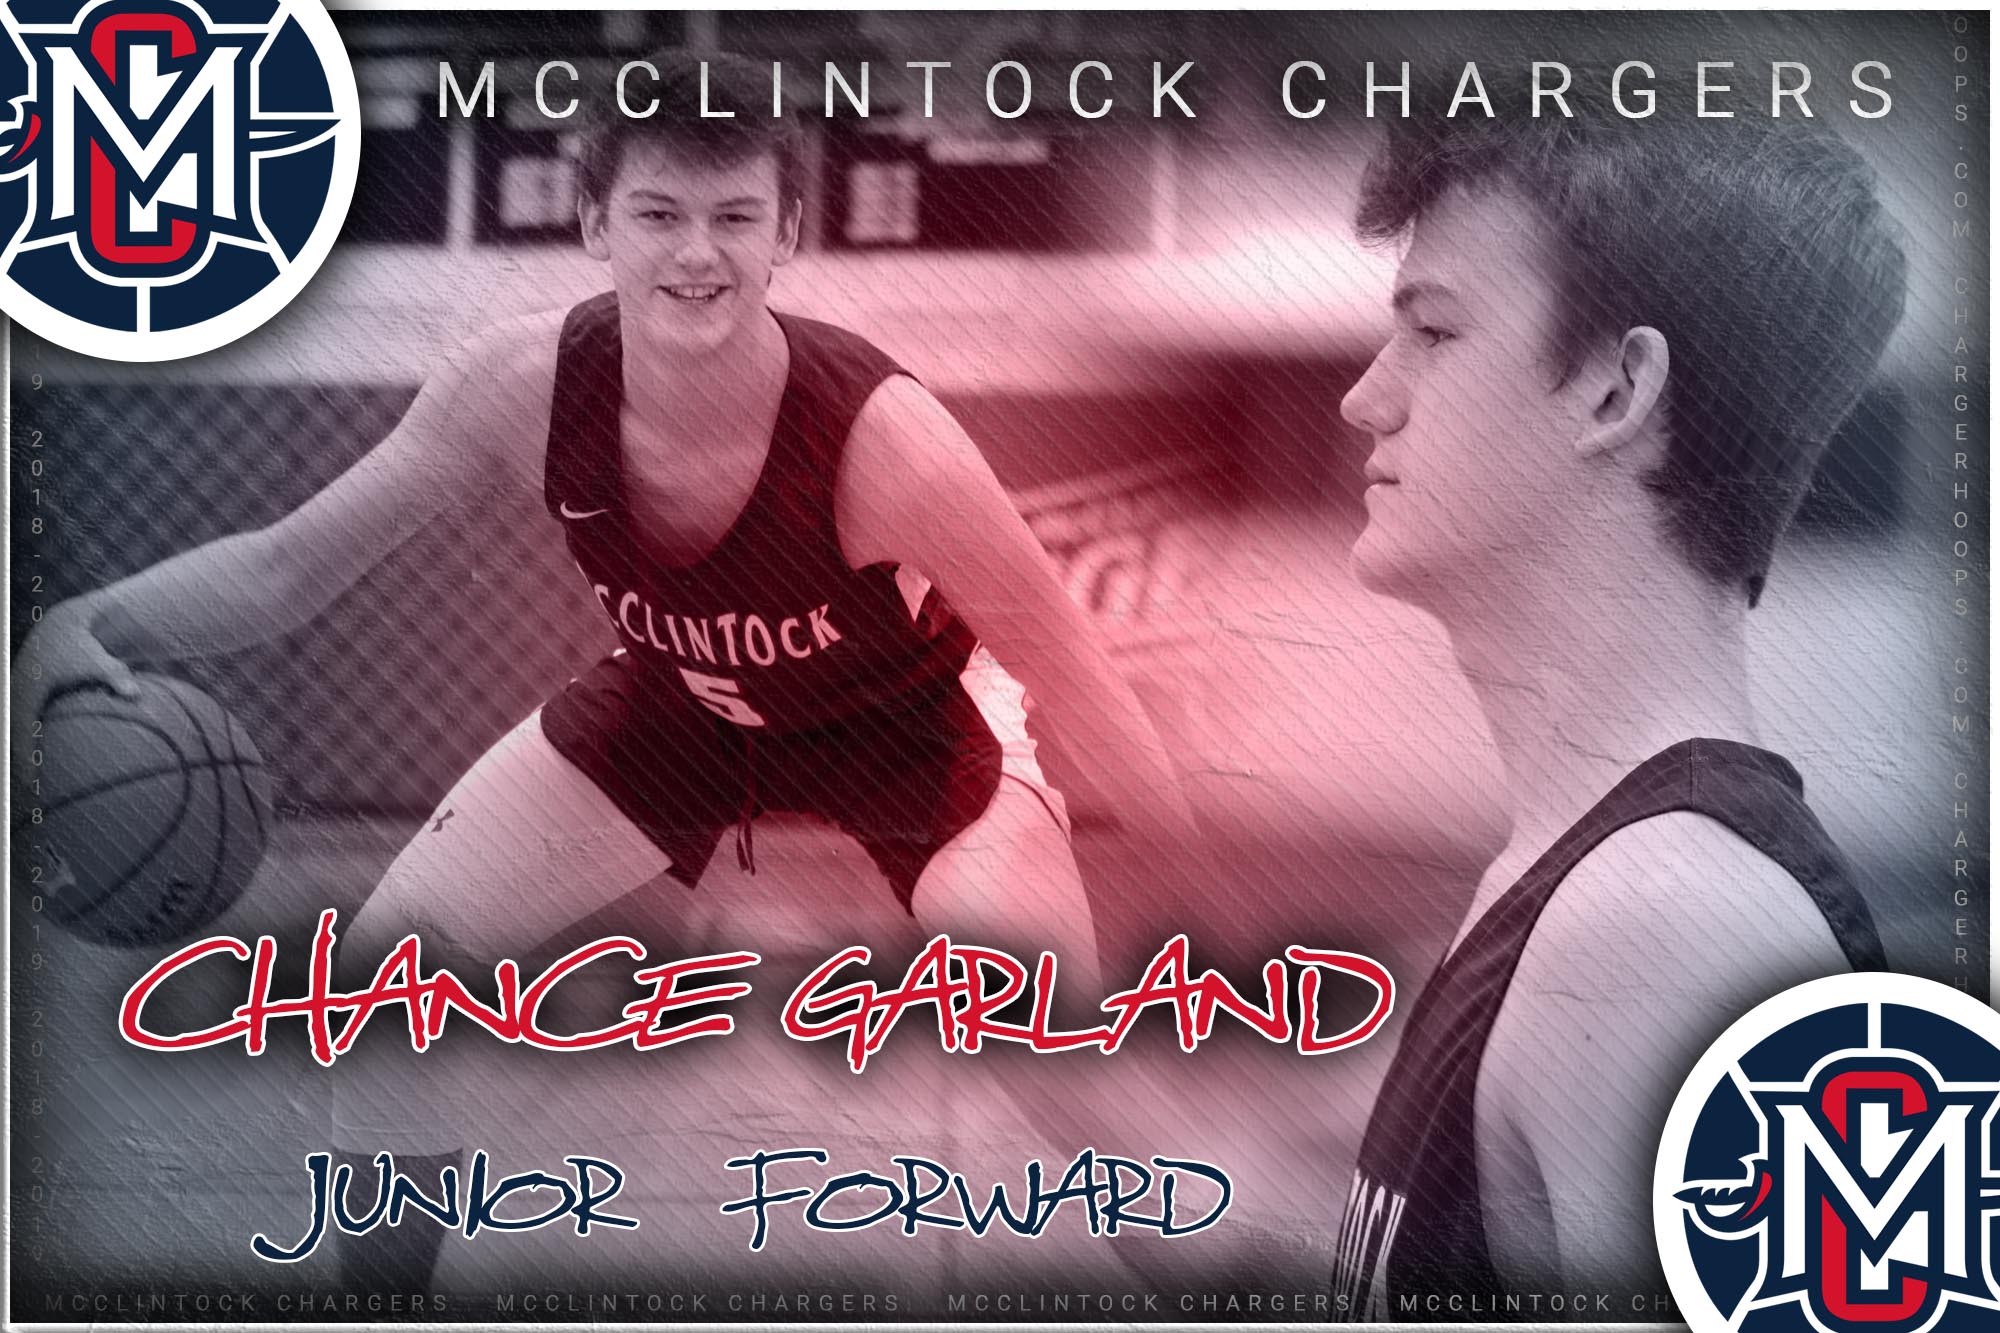 McClintock Chargers Basketball- Chance Garland